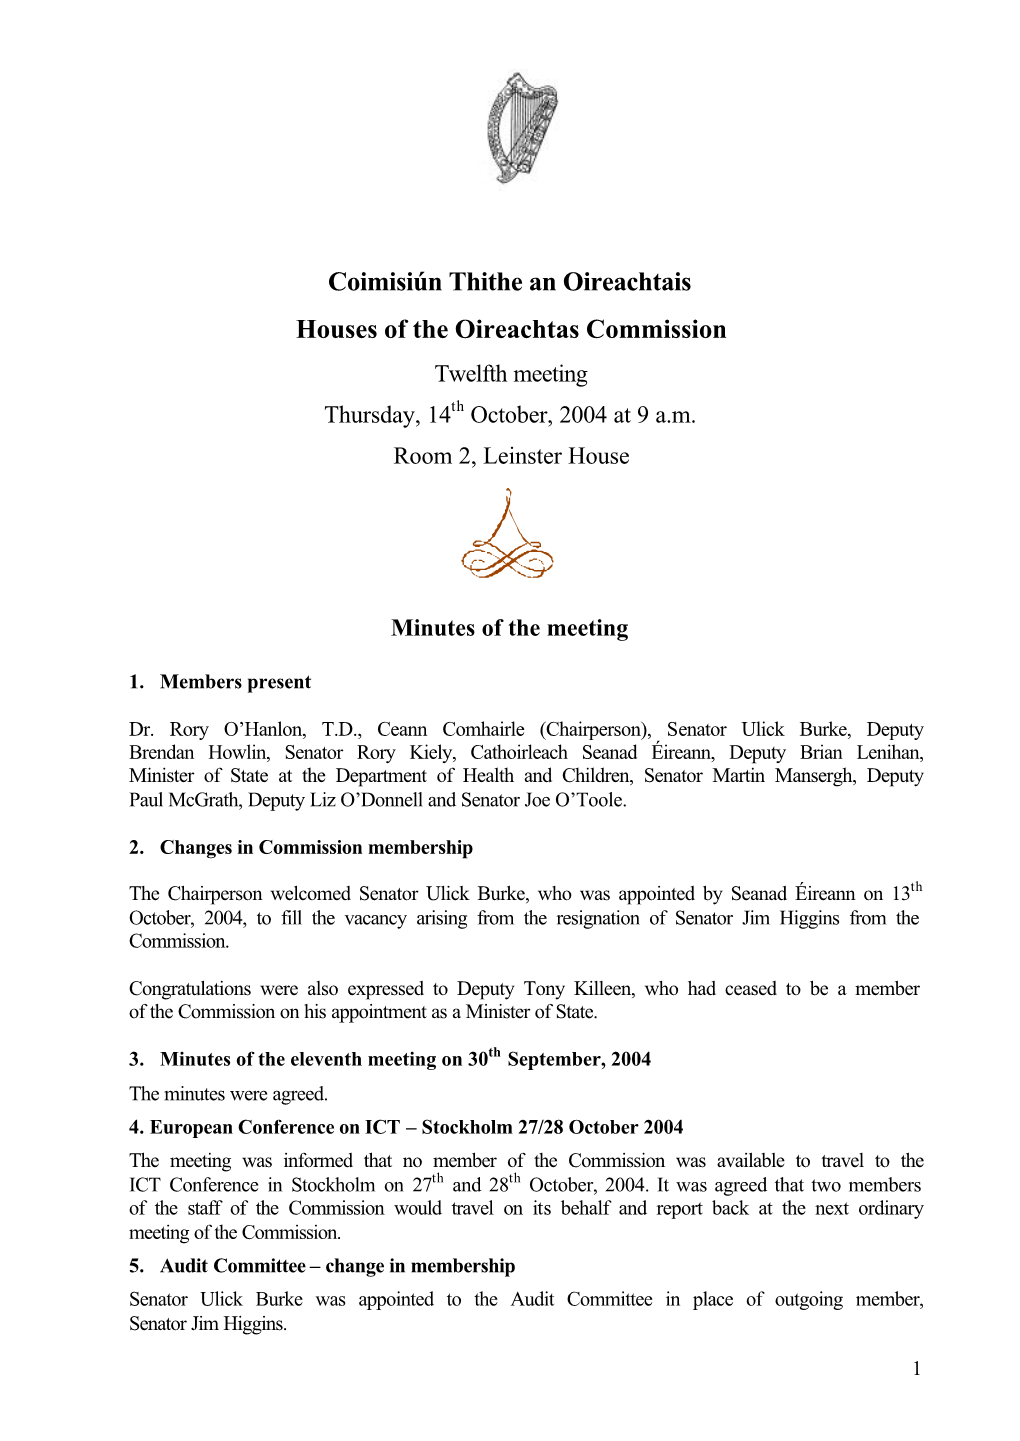 Coimisiún Thithe an Oireachtais Houses of the Oireachtas Commission Twelfth Meeting Thursday, 14Th October, 2004 at 9 A.M